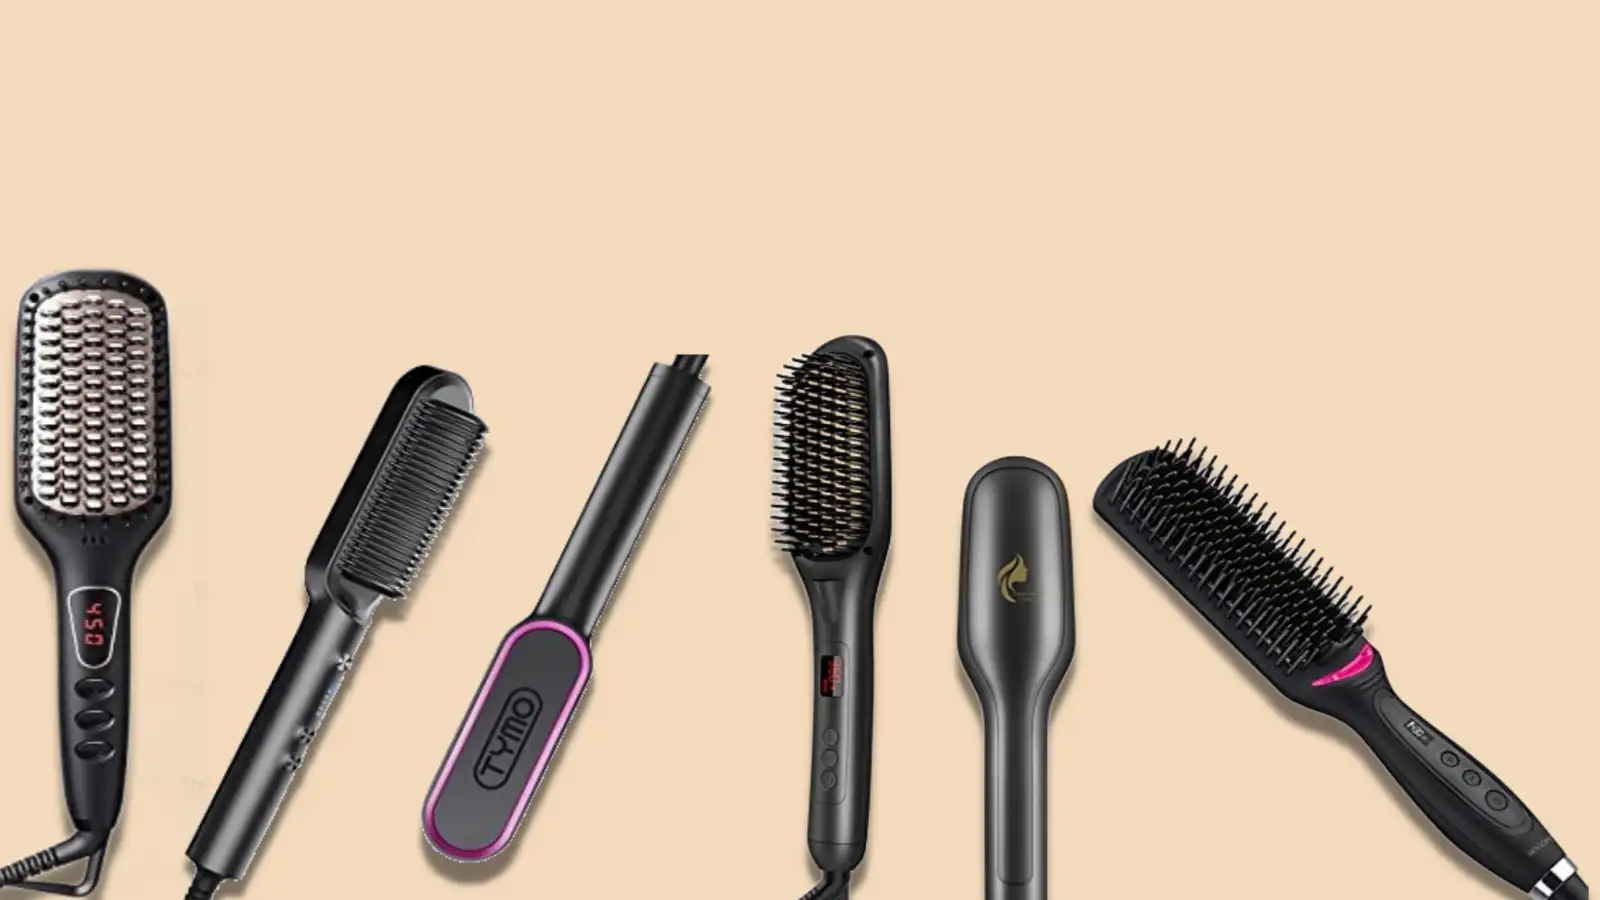 Aggregate more than 140 hair straightner comb latest